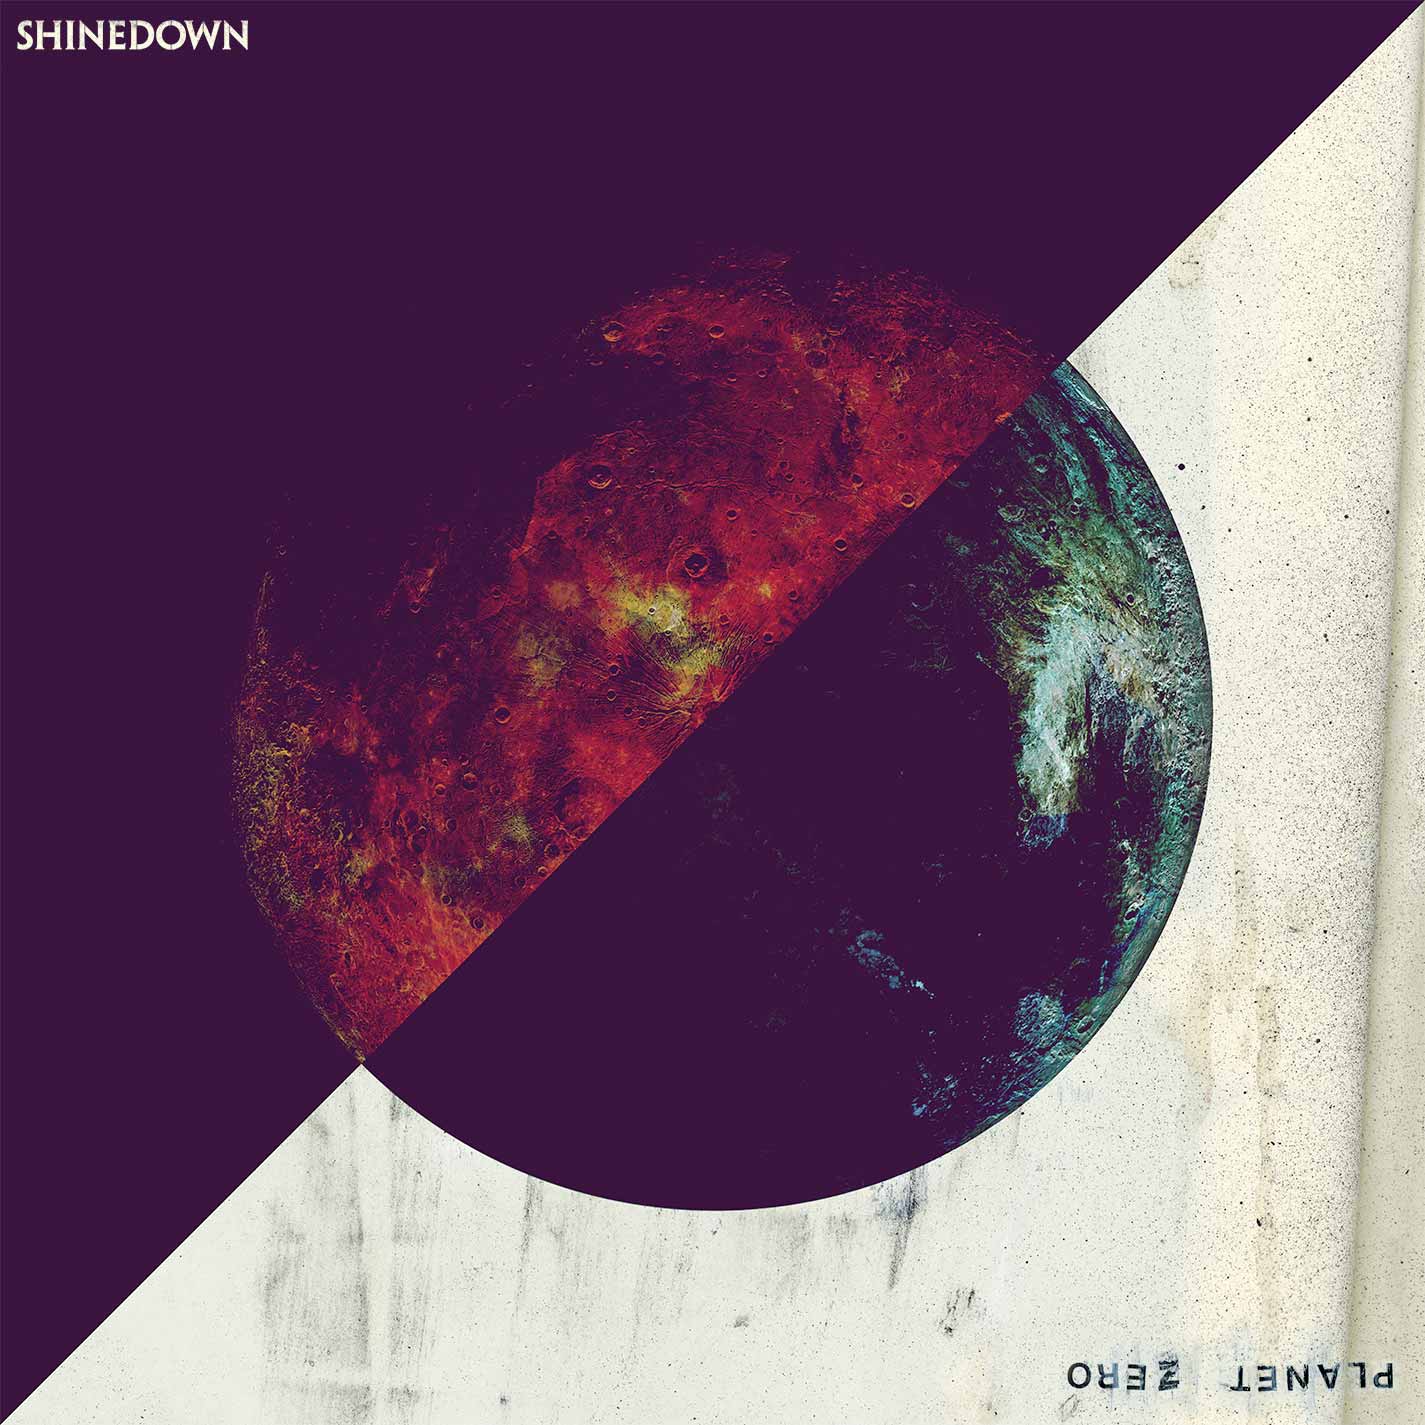 Shinedown Planet Zero album